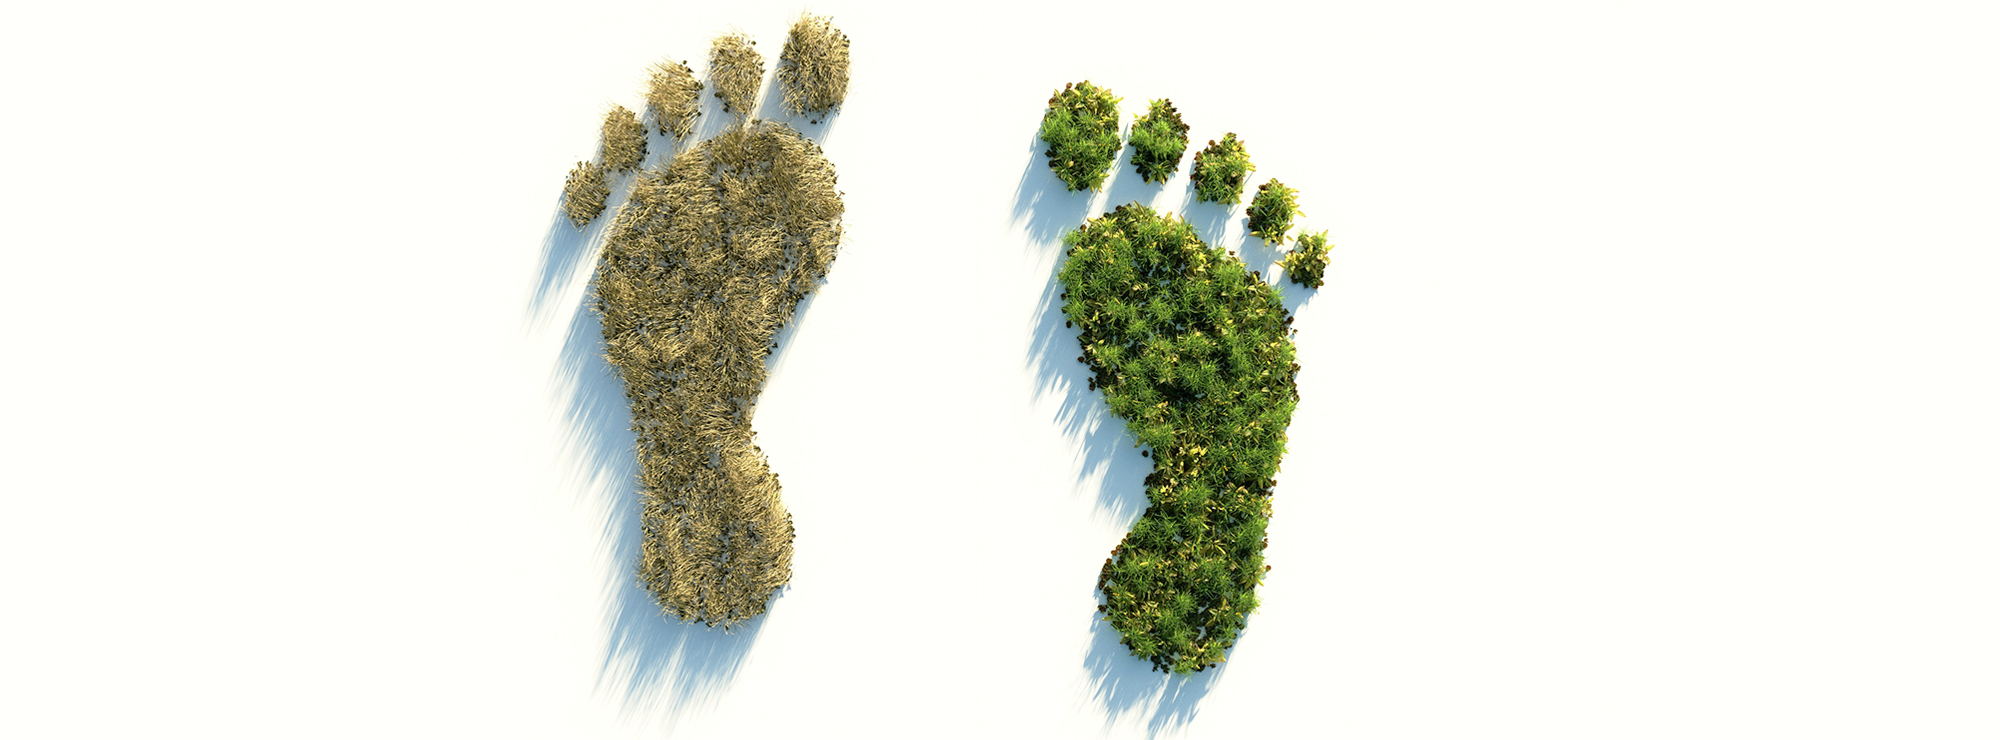 Ecological footprint. Photo: Colin Behrens, Pixabay.